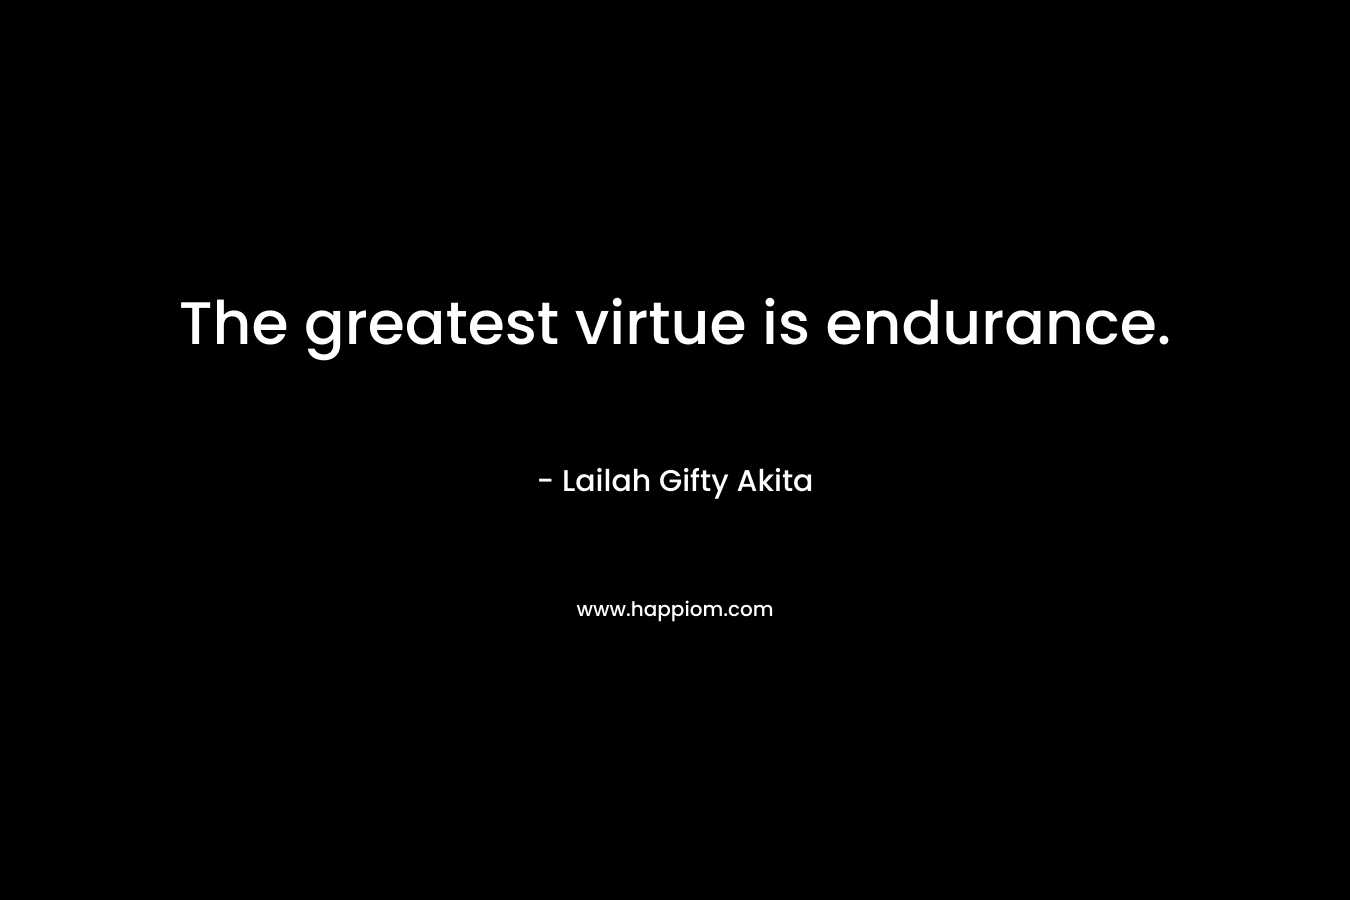 The greatest virtue is endurance.